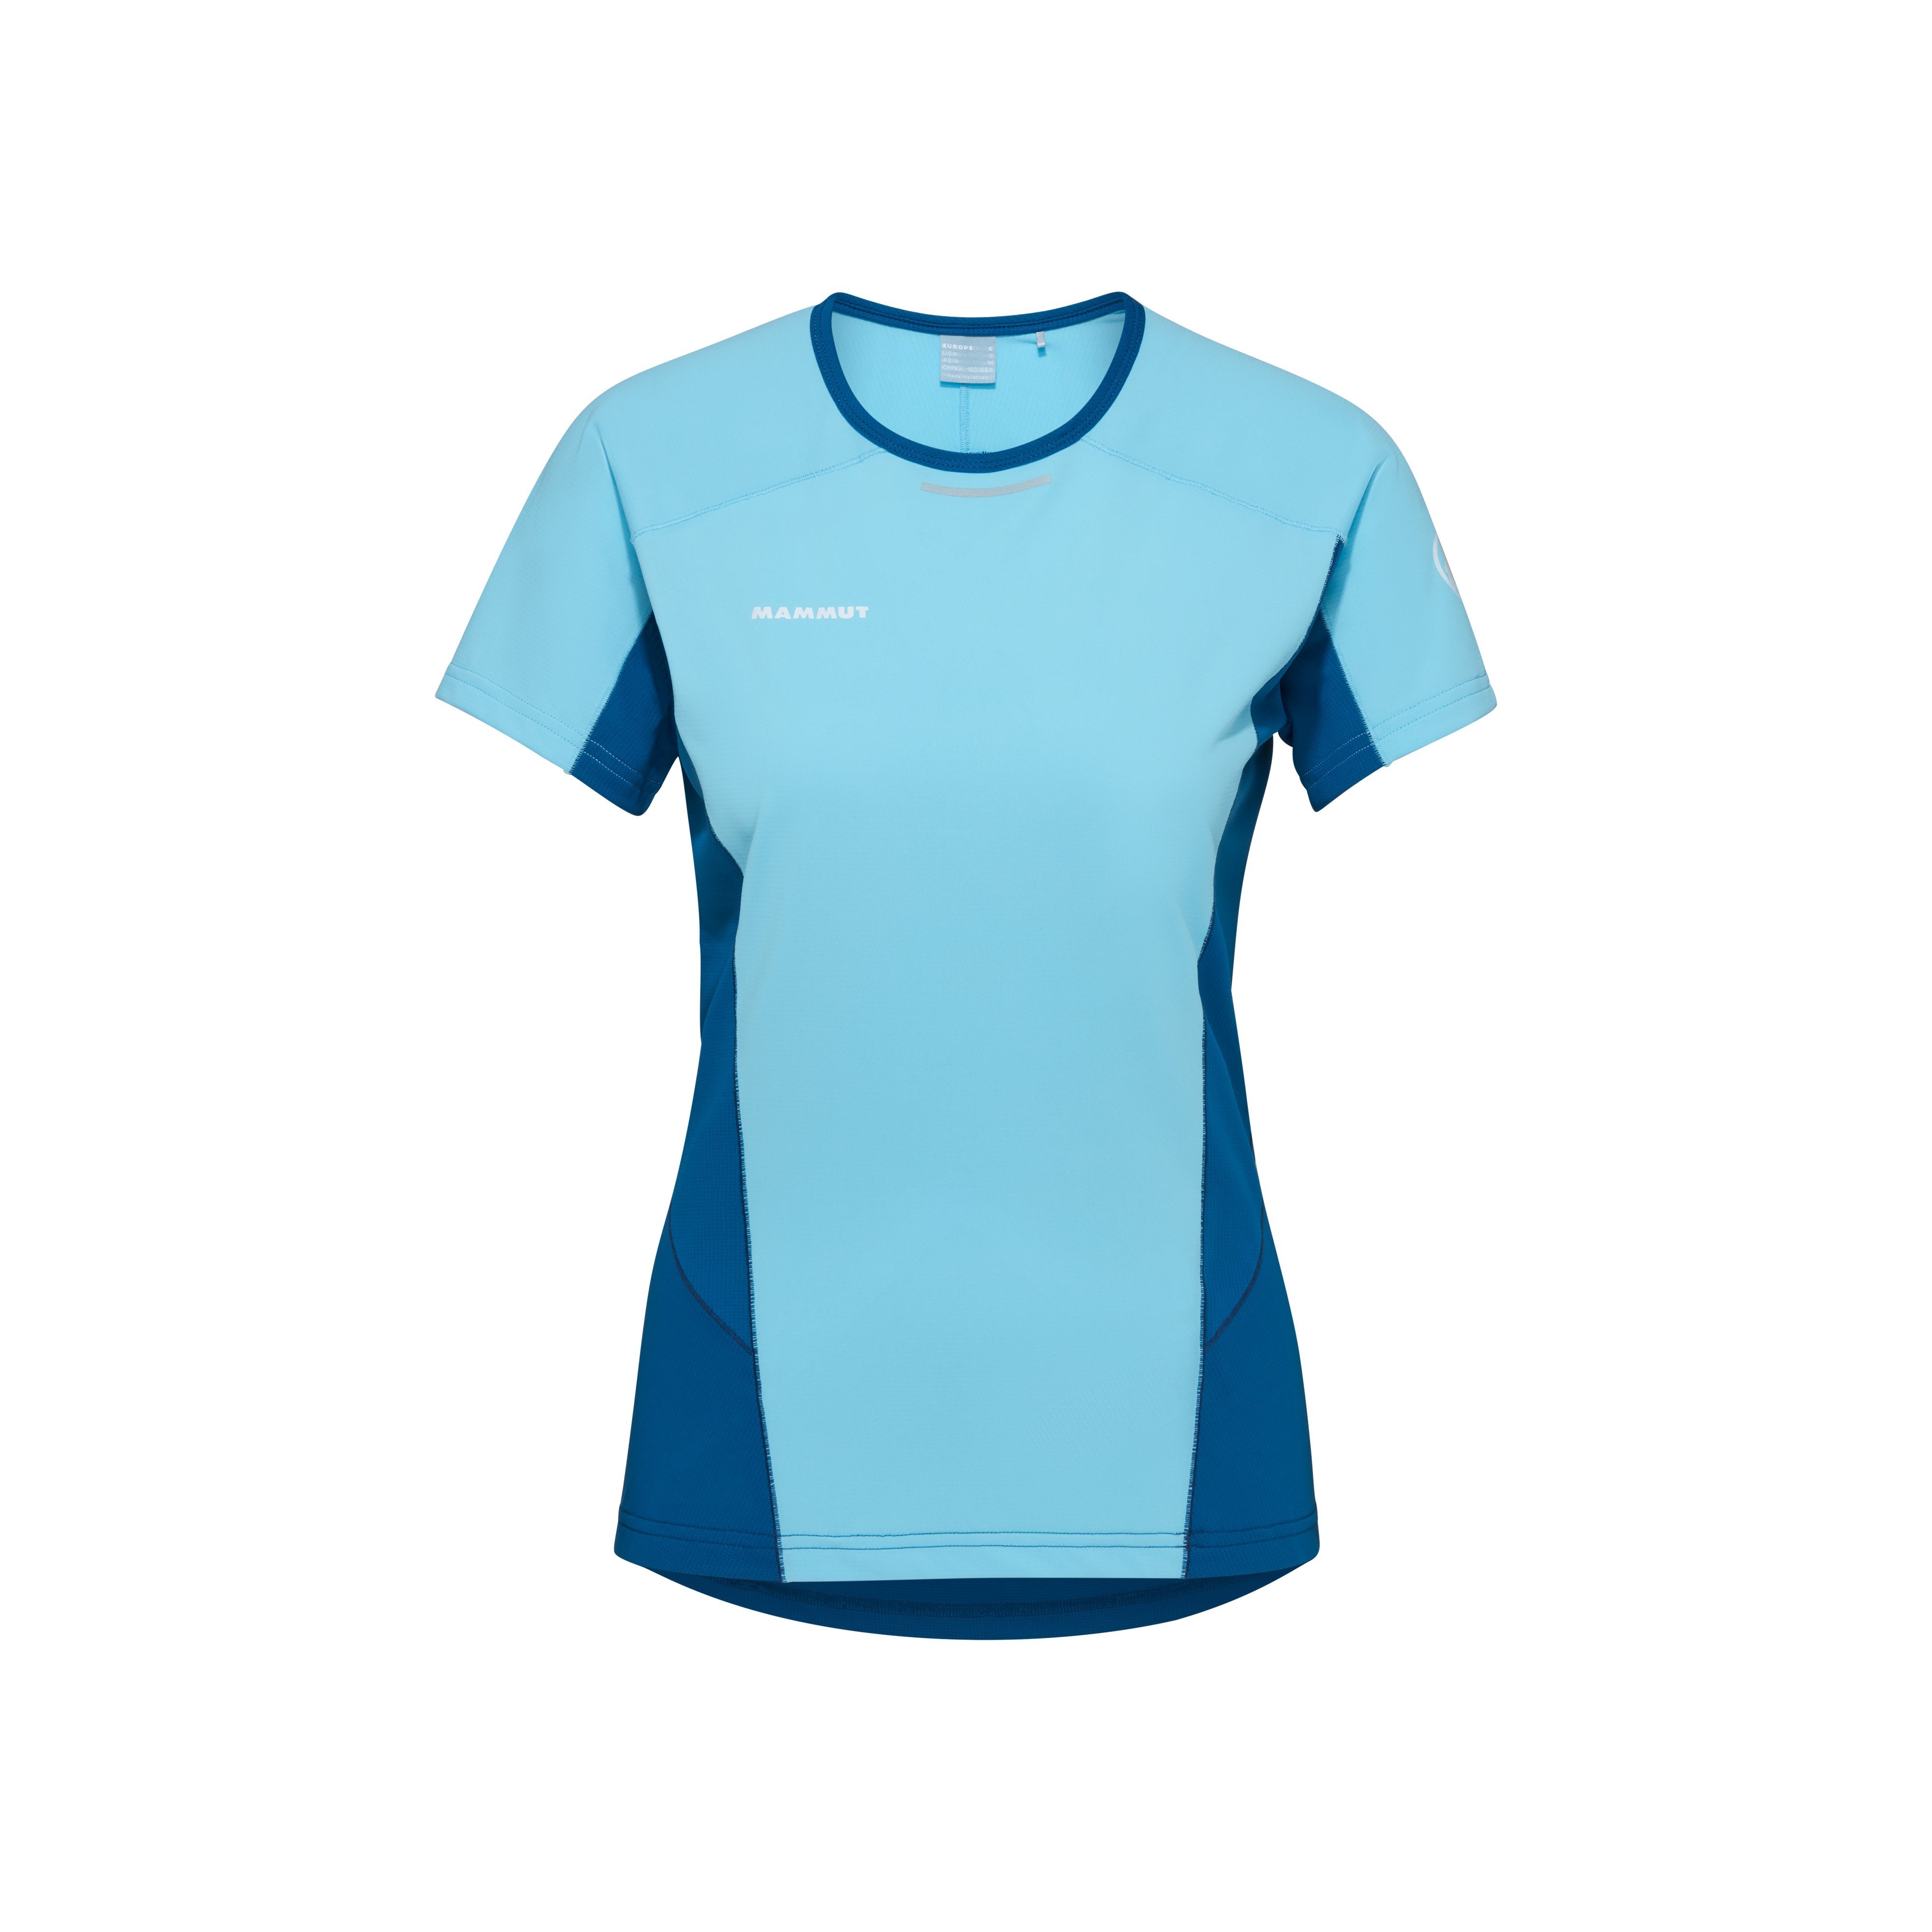 Aenergy FL T-Shirt Women - cool blue-deep ice, L product image